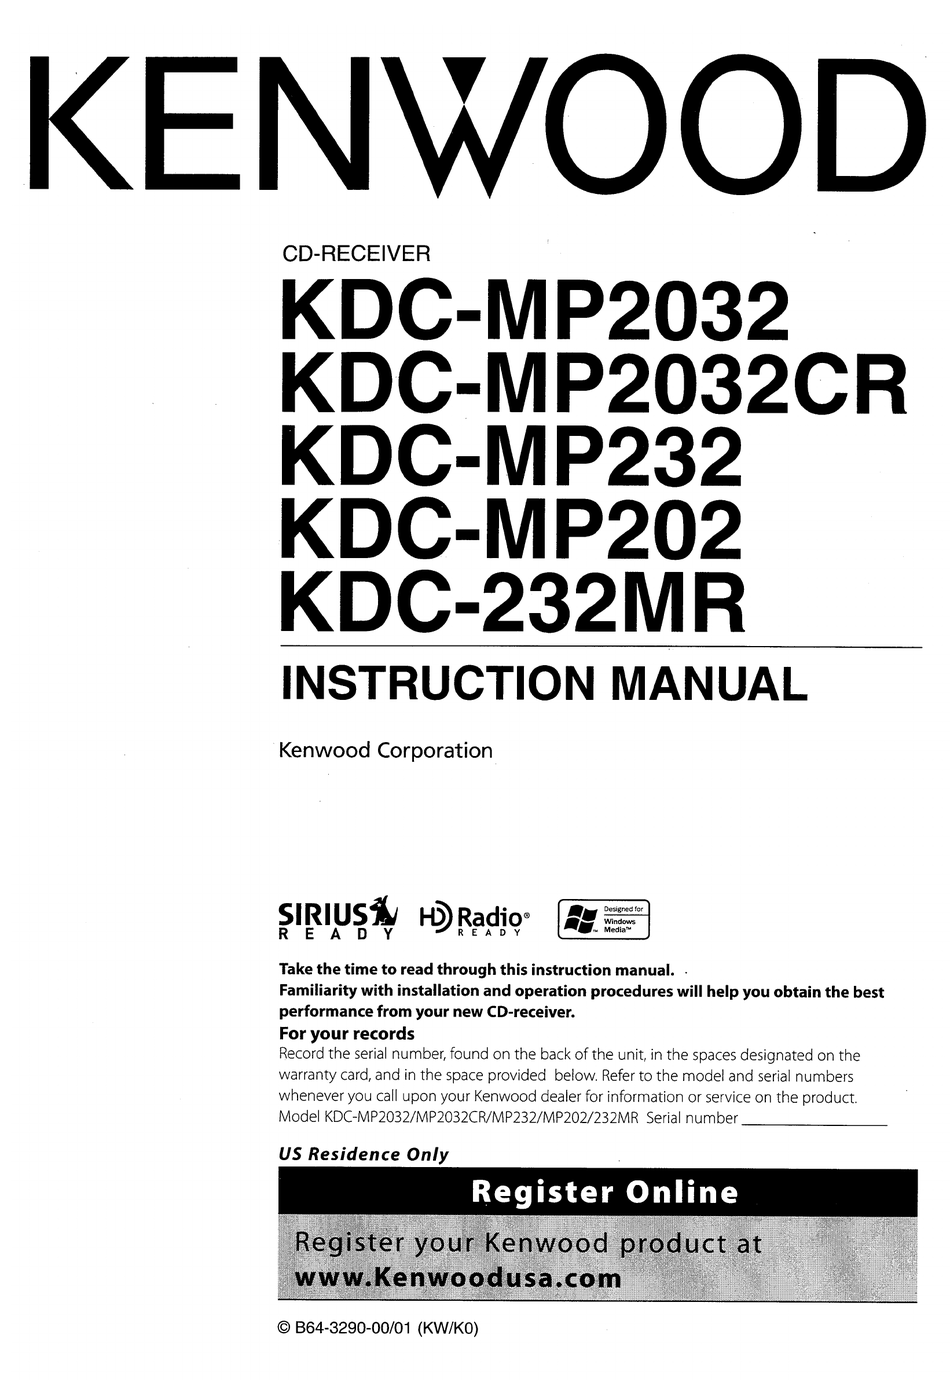 KENWOOD KDC-MP2032 INSTRUCTION MANUAL Pdf Download | ManualsLib Kenwood Car Stereo ManualsLib